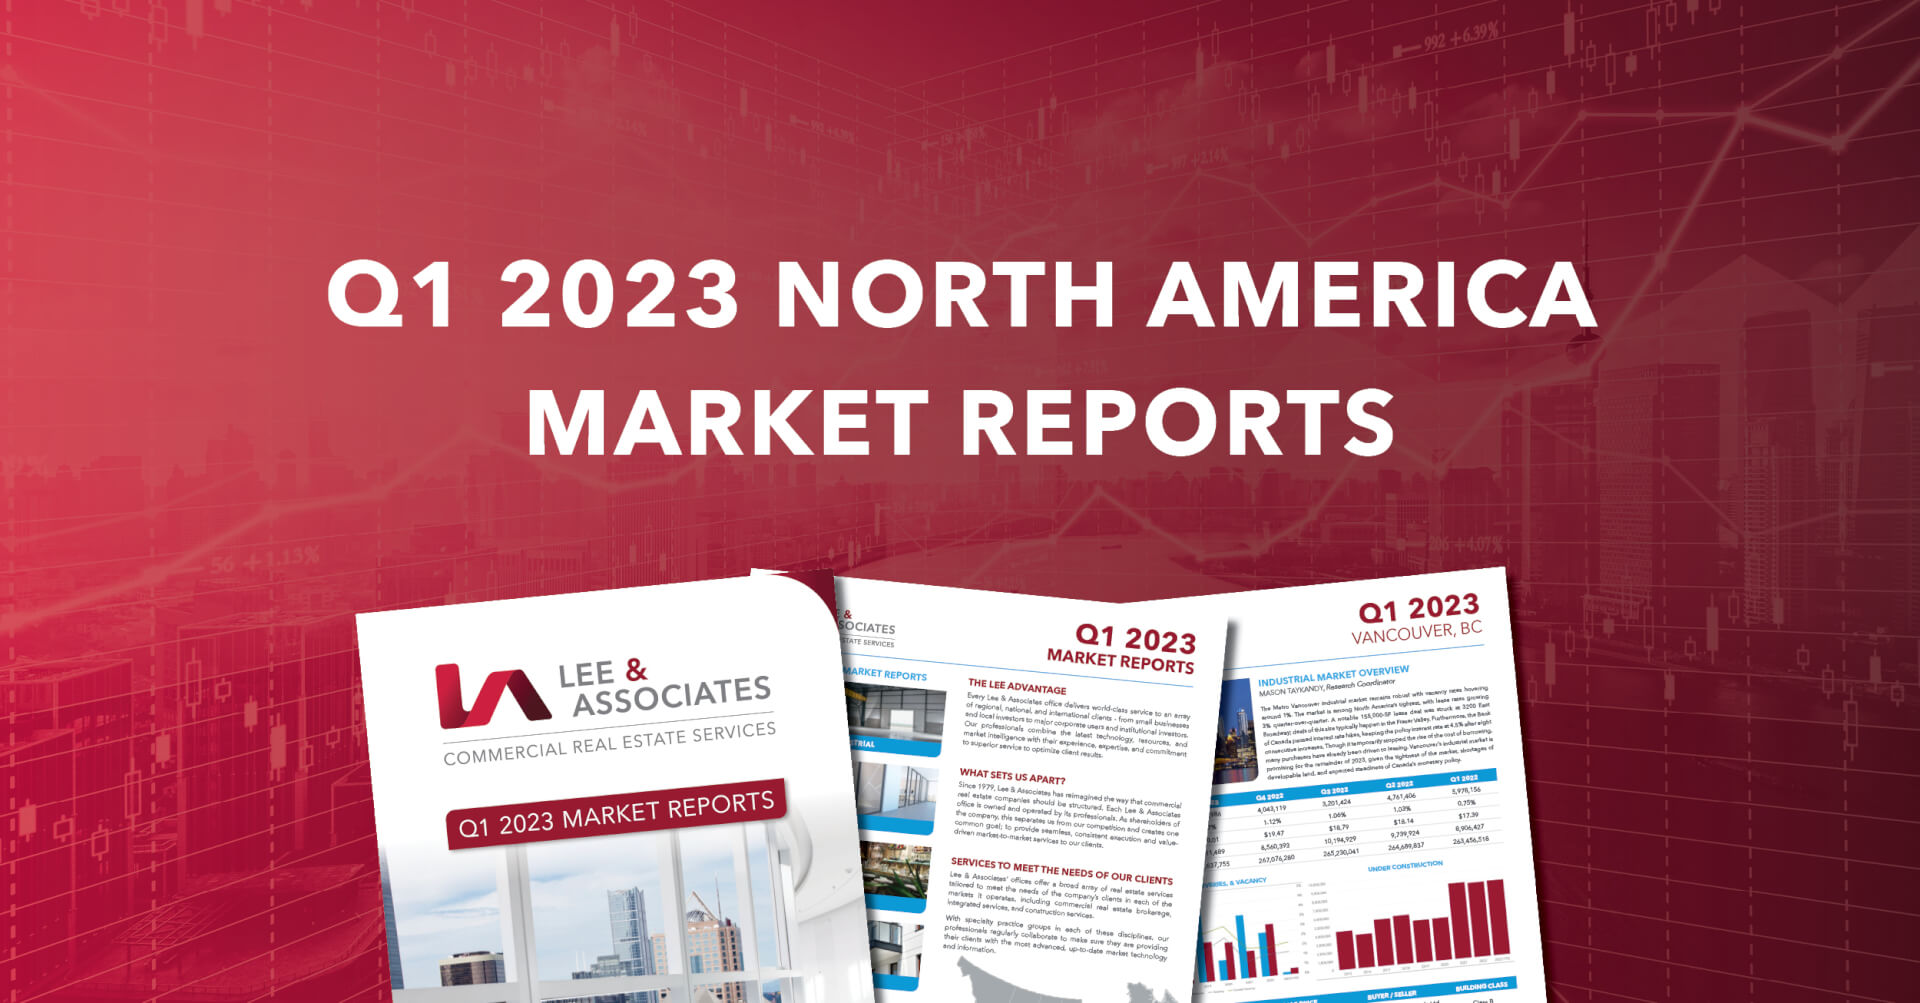 Q1 2023 North America Market Reports Released